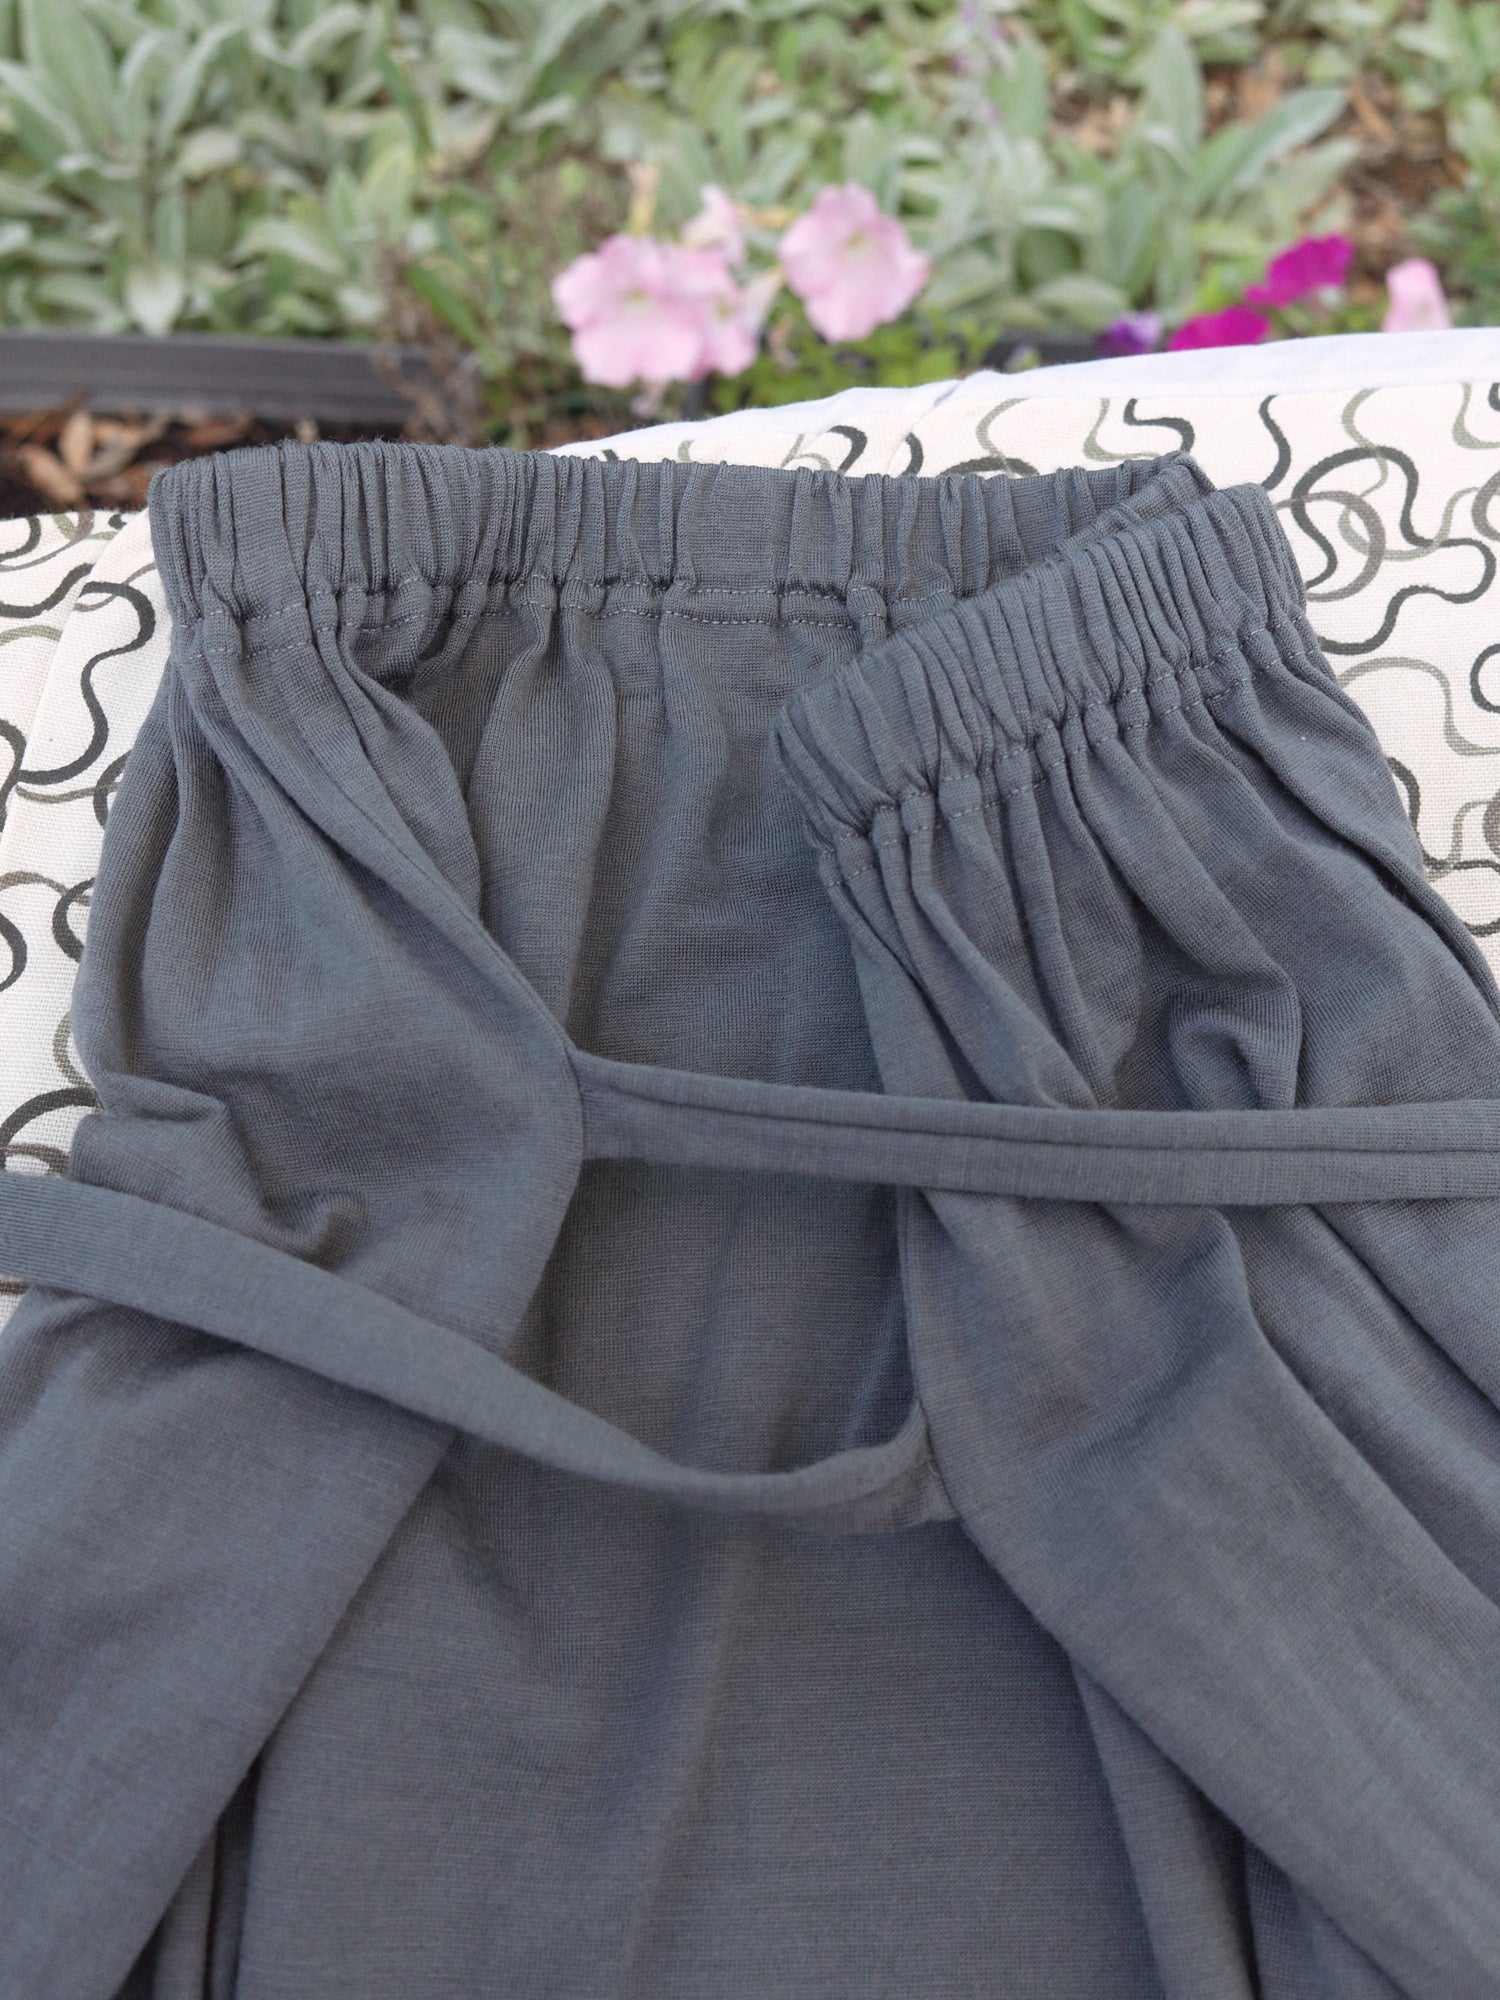 Comme des Garcons 1993 grey wool hem interfacing skirt - womens S M